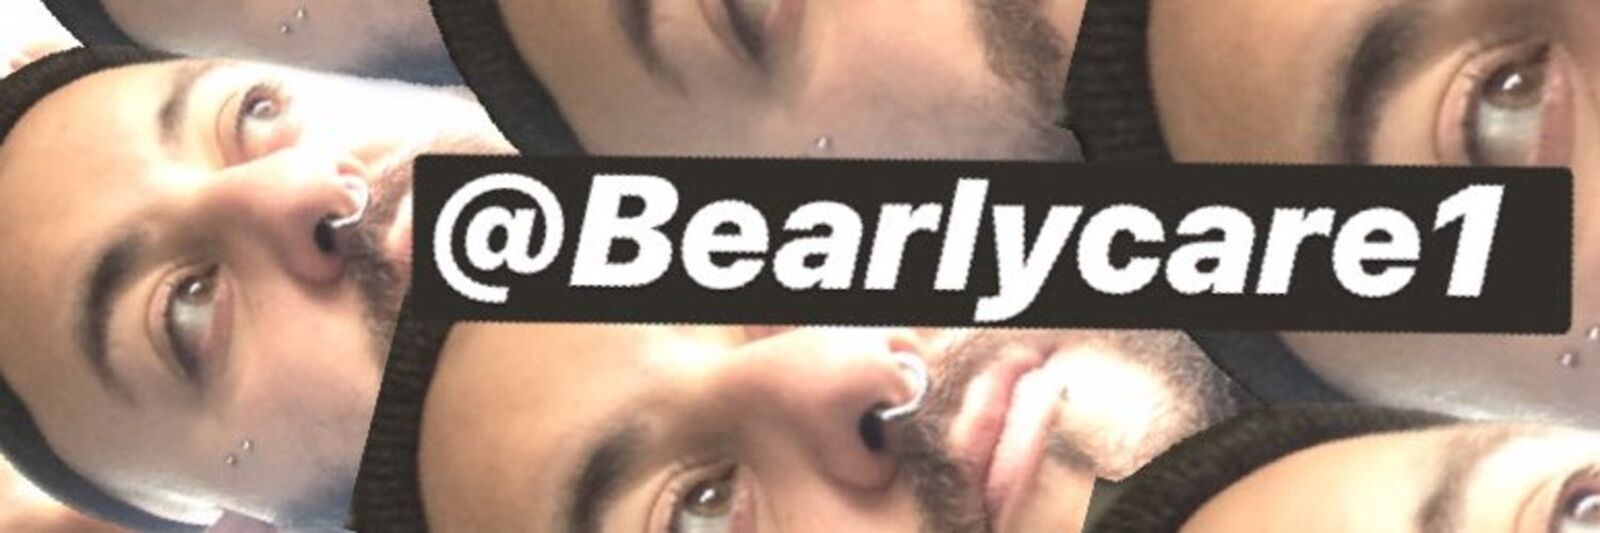 bearlycare1